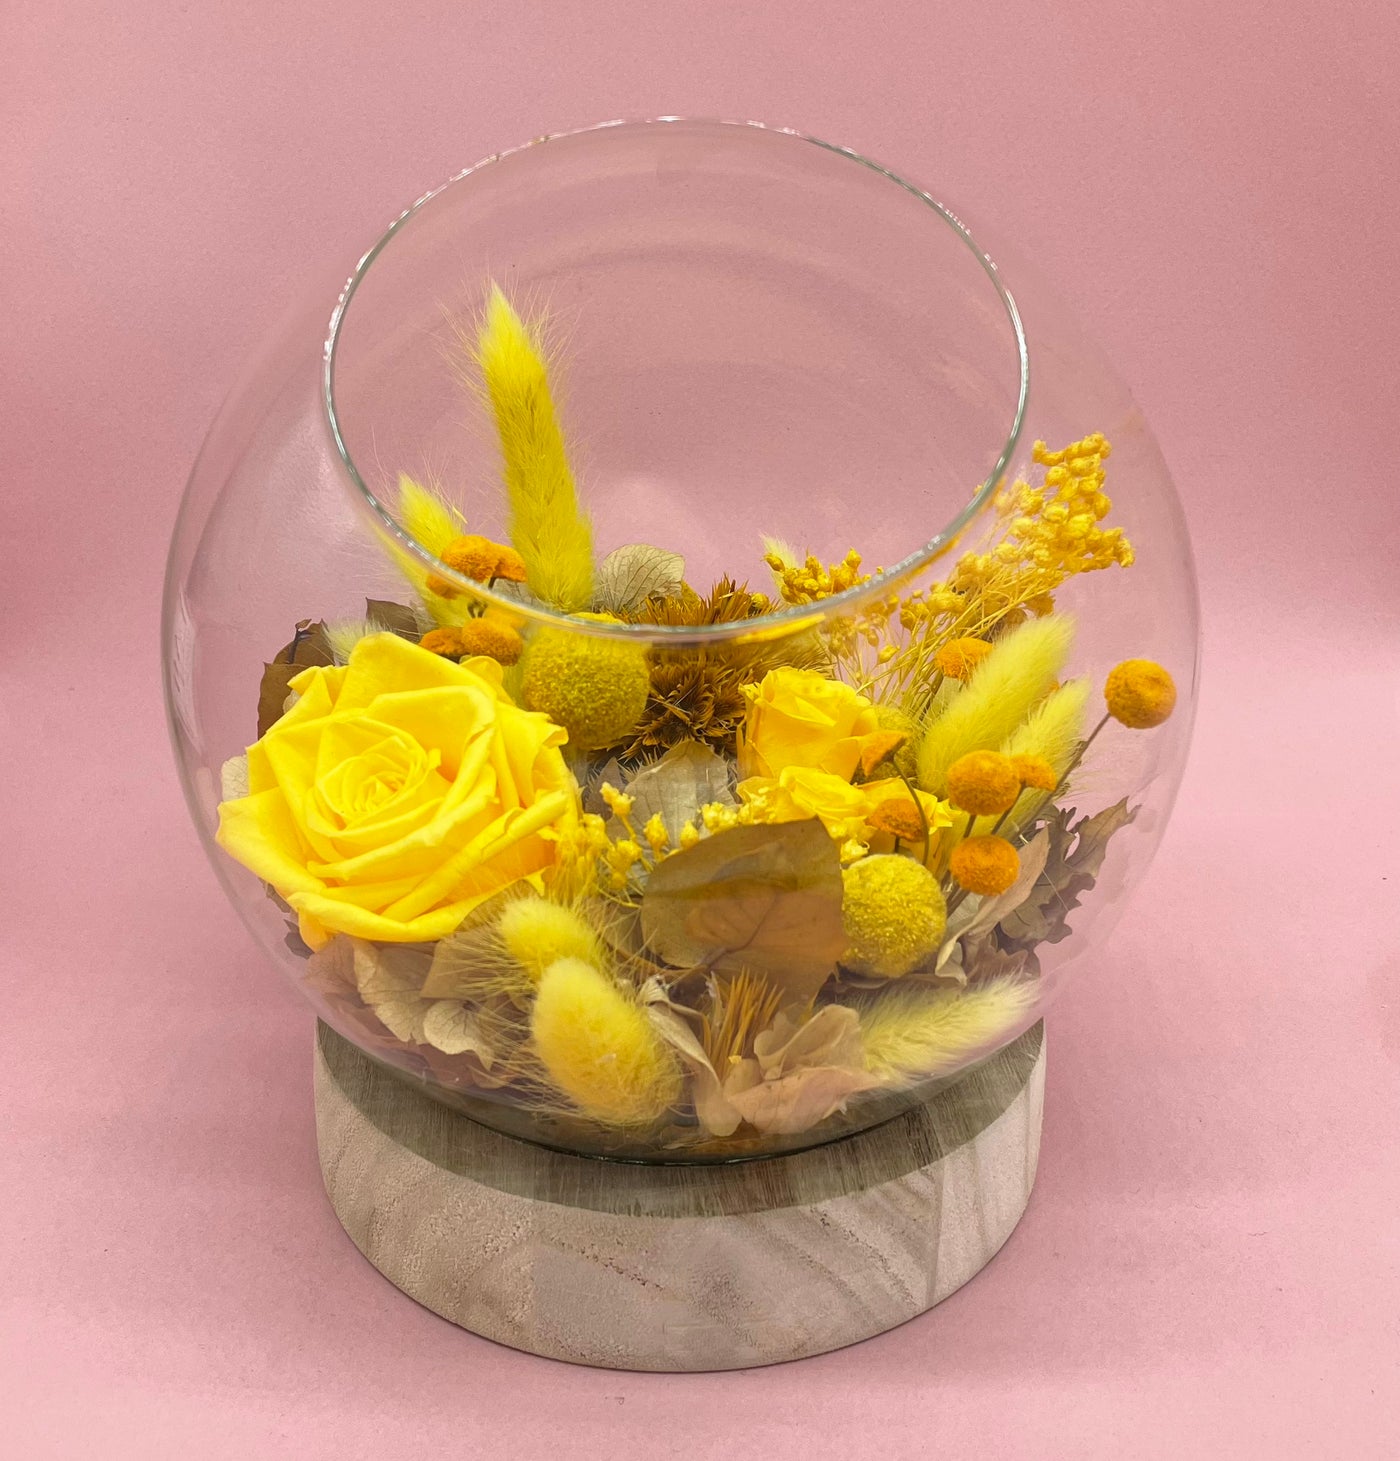 Bulle en fleurs stabilisées éternelles composé de Rose jaune, Mini Rose jaune, Hortensia, Lagurus, Craspedia, Broom, Botao, Chardon. Vu de face